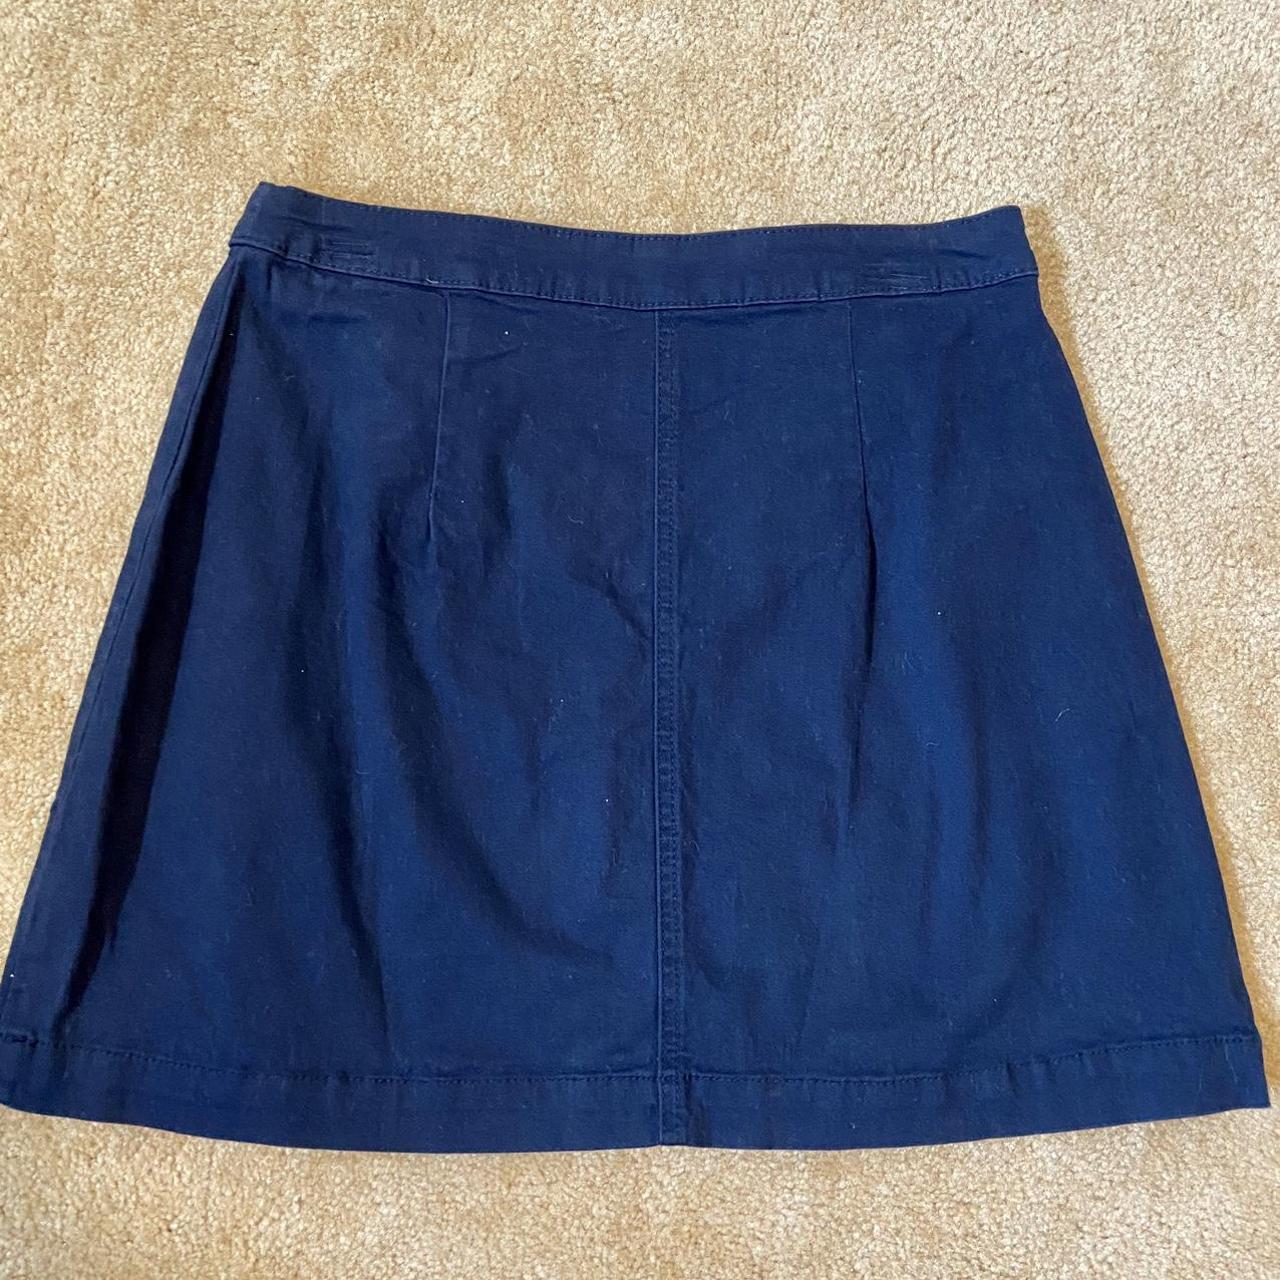 Copper Key Women's Blue and Navy Skirt | Depop